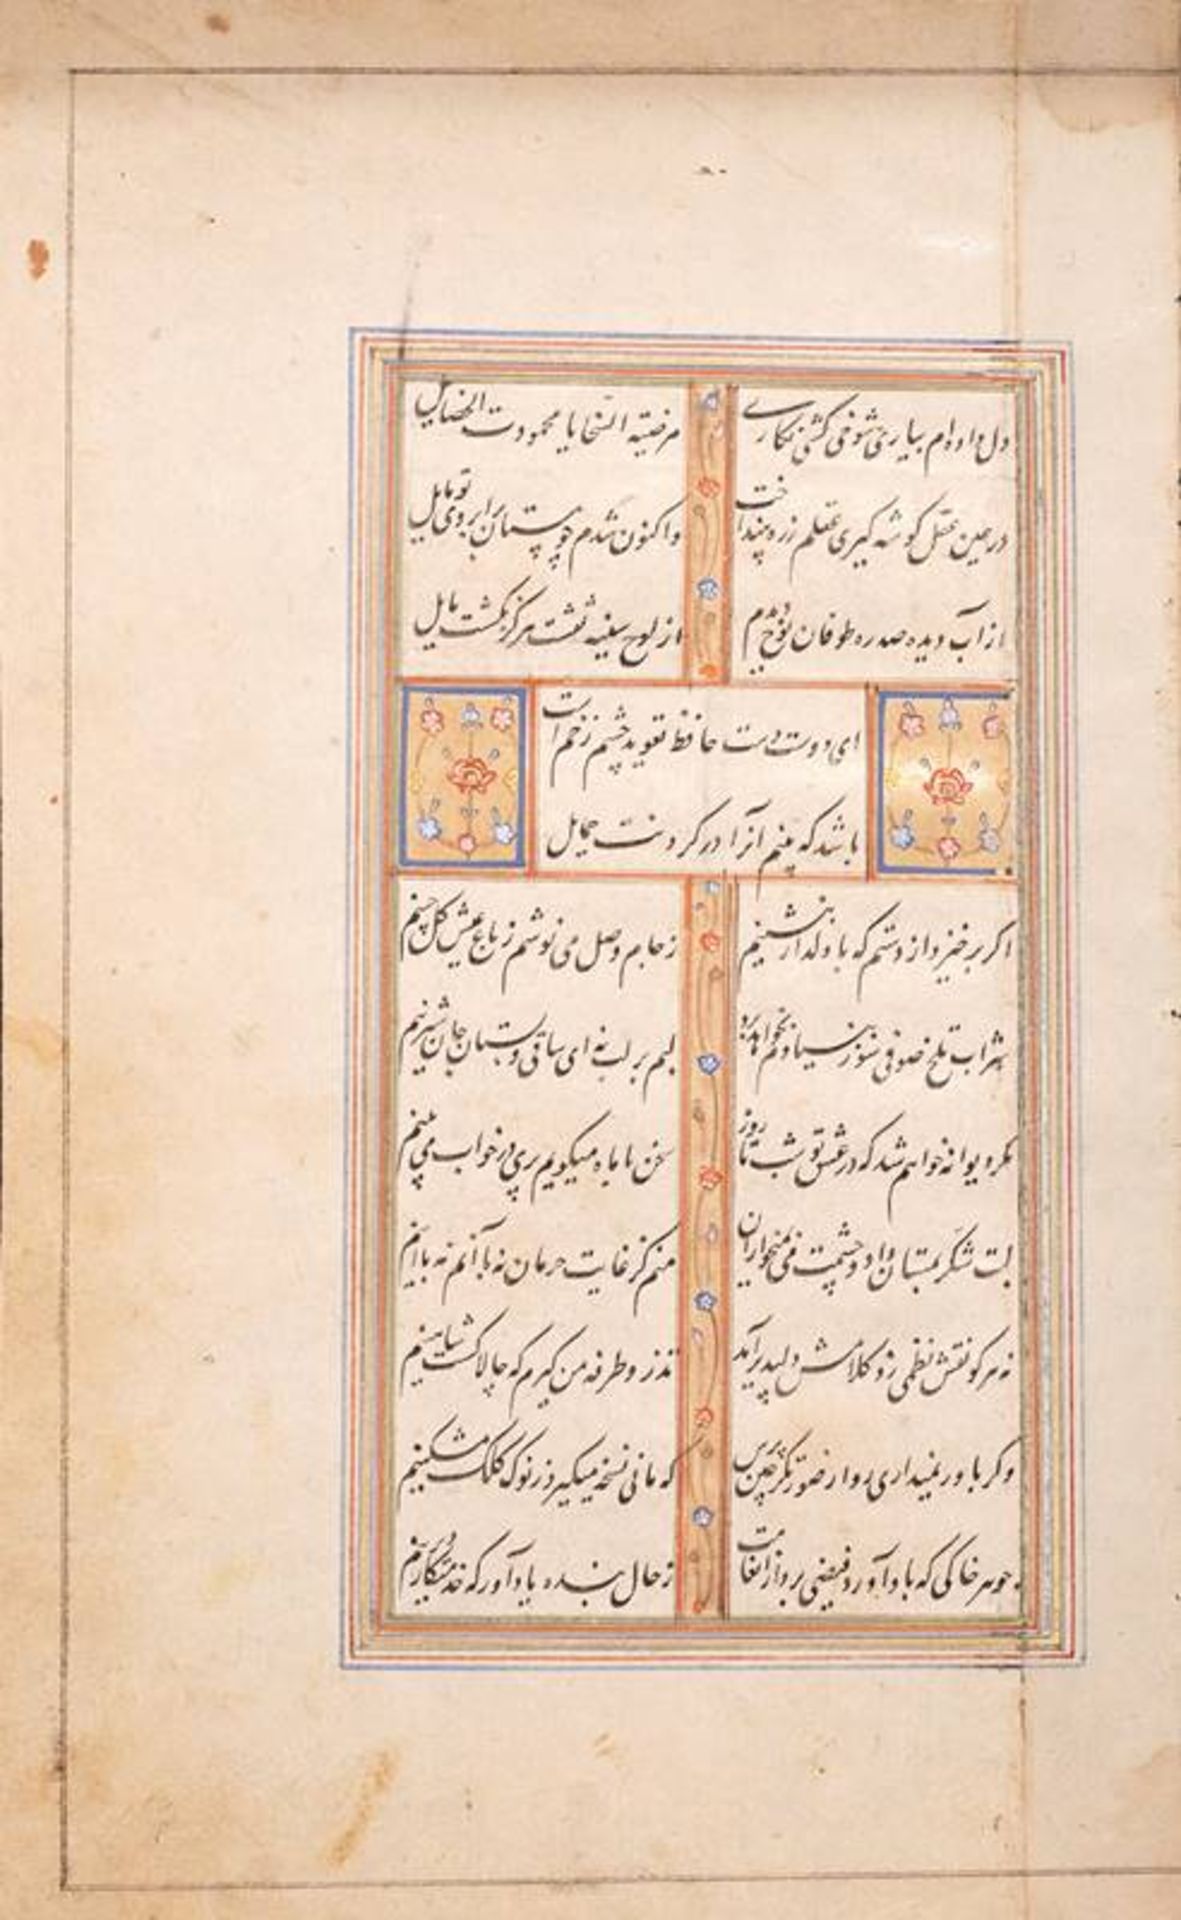 Koran page